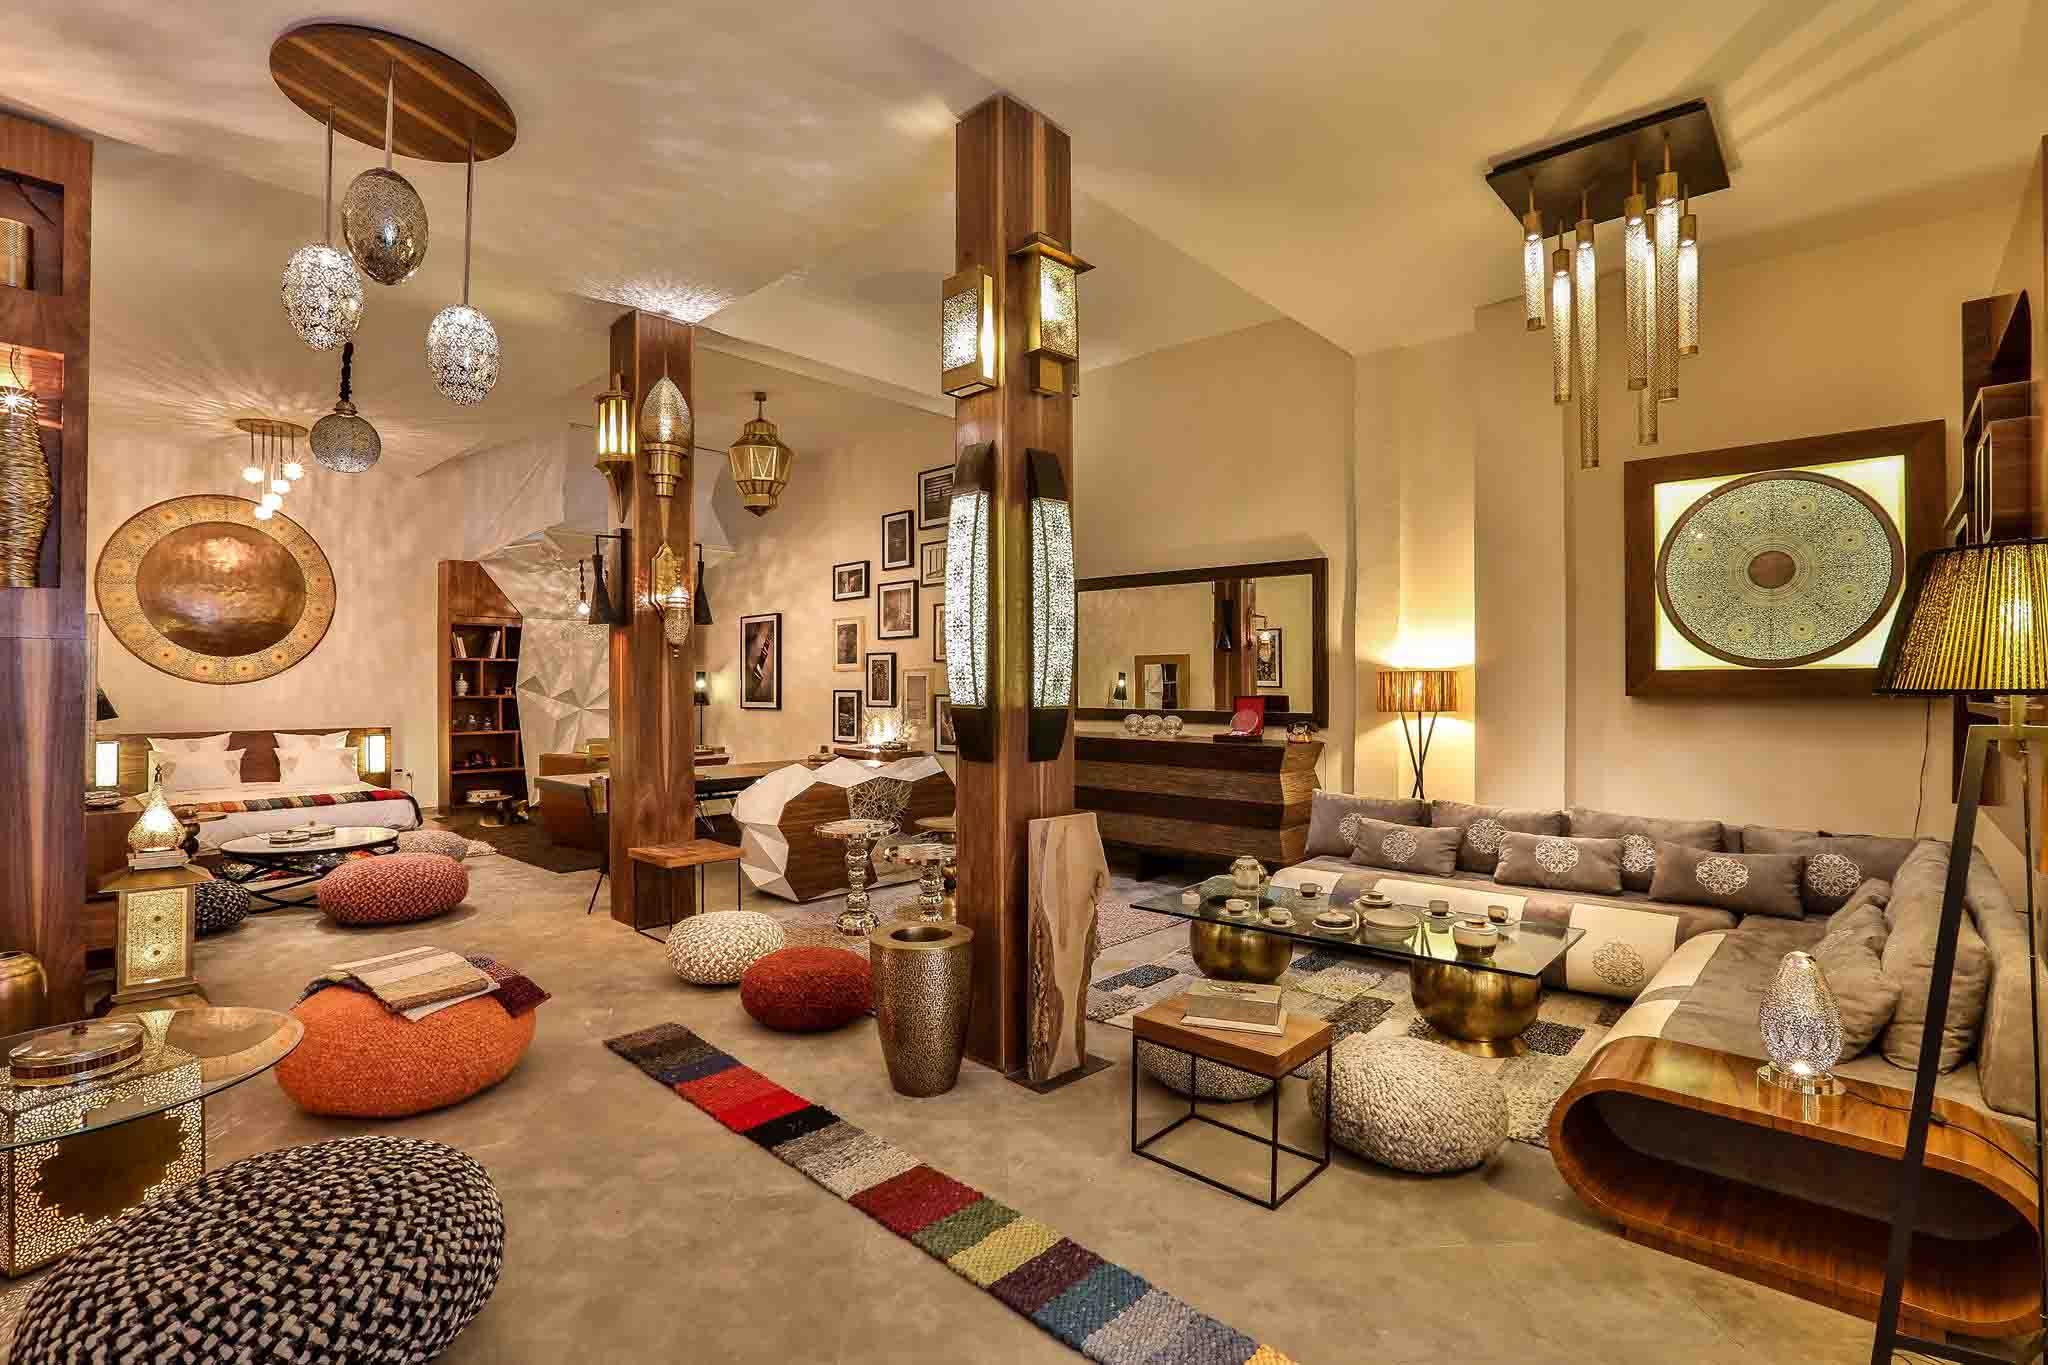 The best Interior Hotspots in Marrakech?